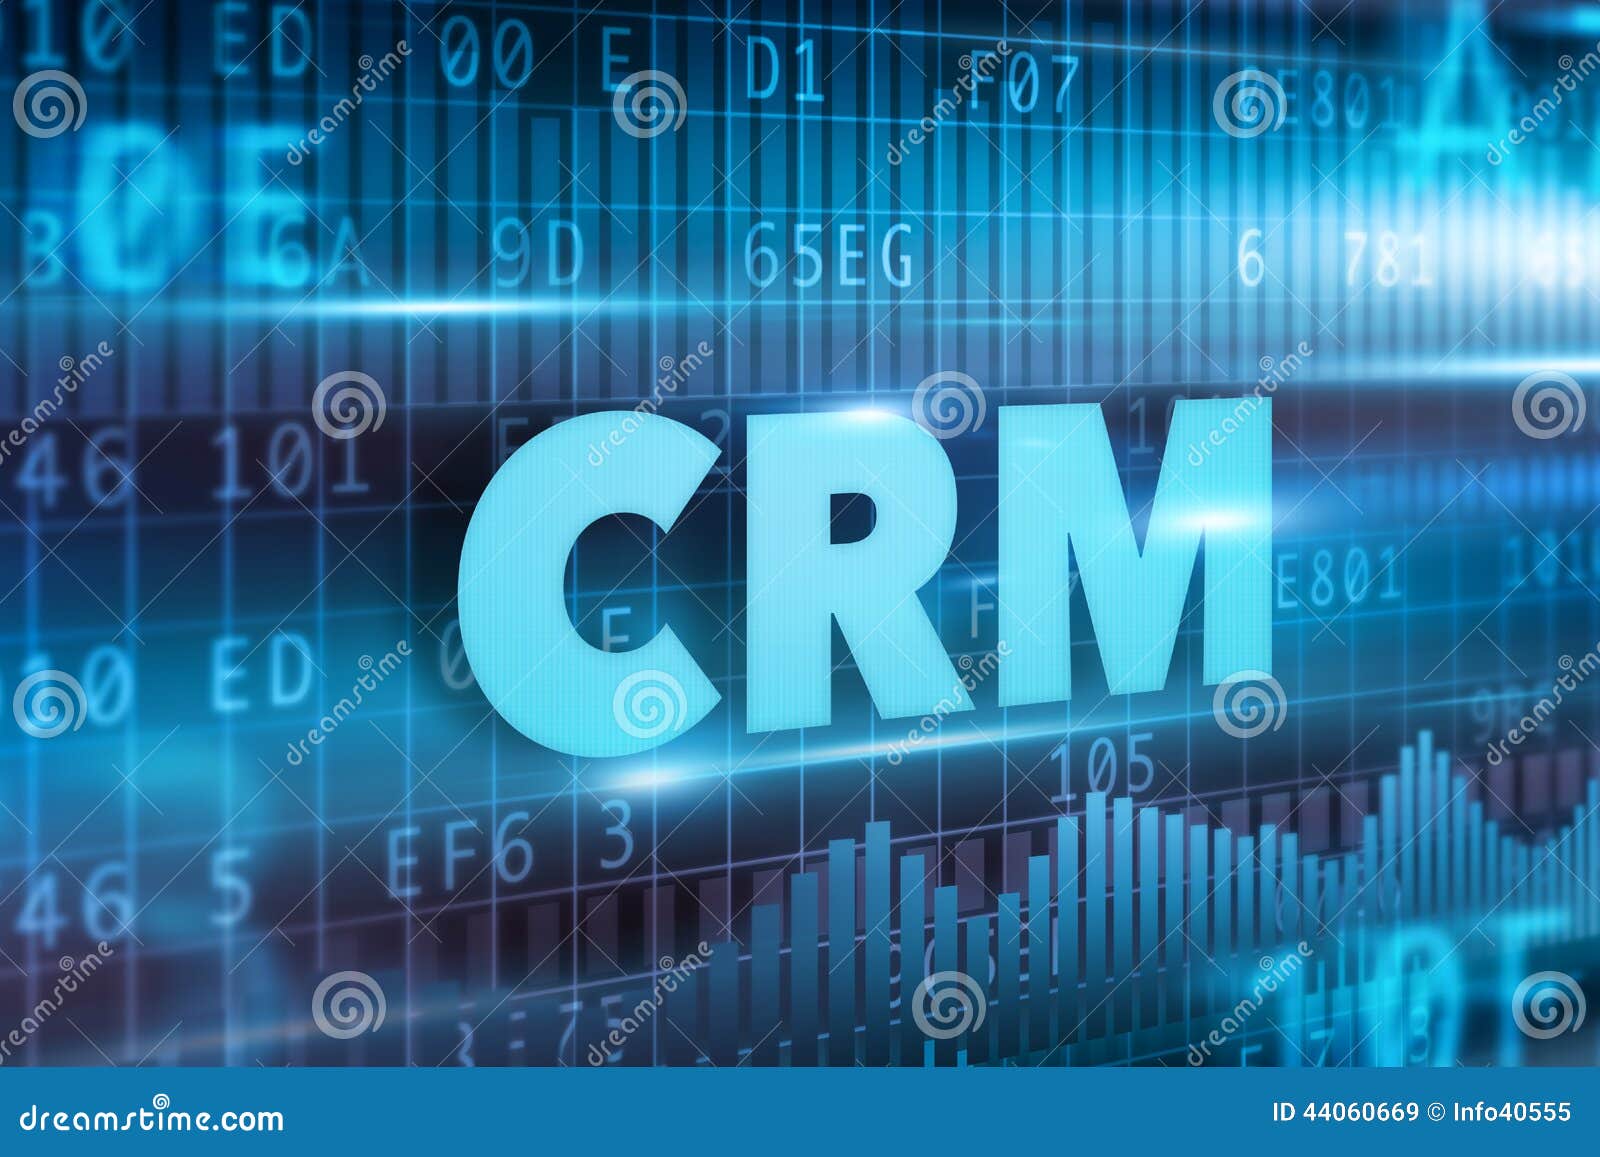 crm - customer relationship management